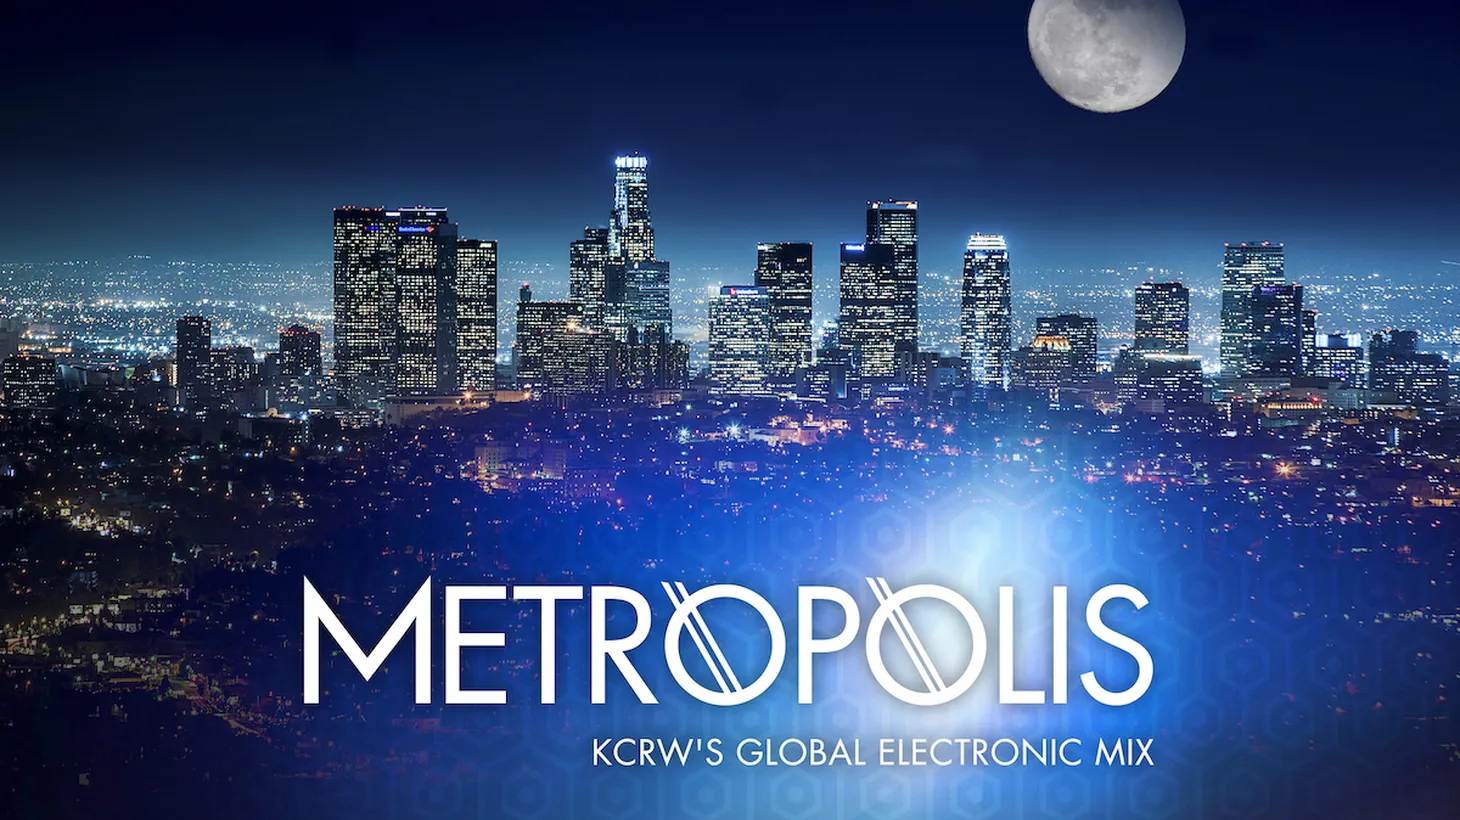 Metropolis playlist, December 12, 2020.